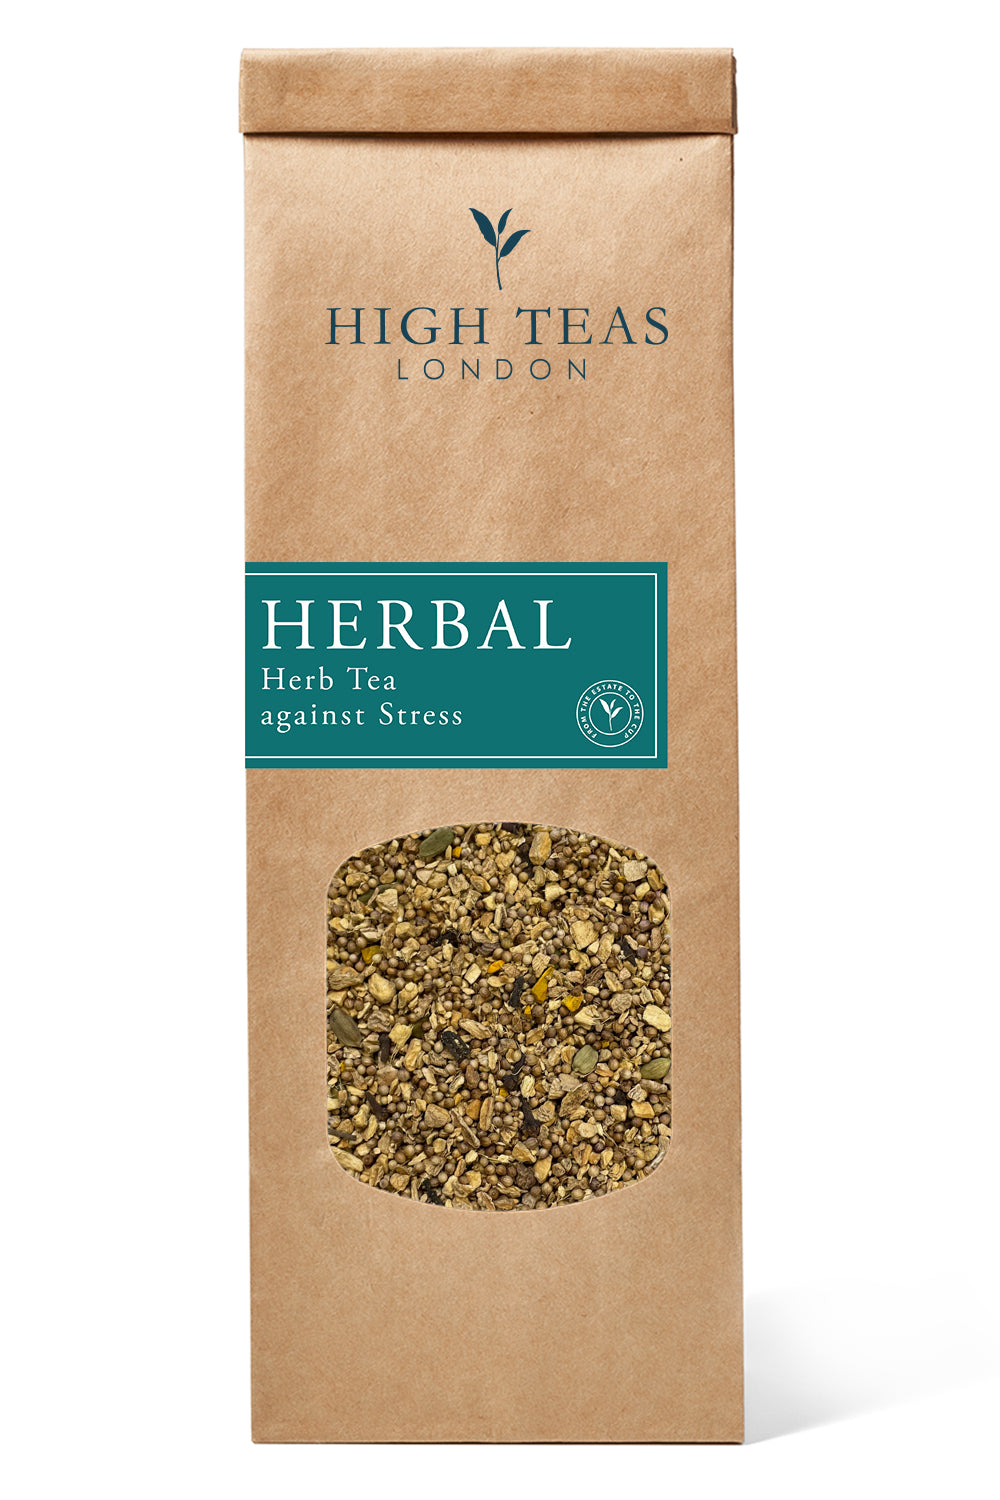 Herb Tea against Stress - Vata supports the Dosha "VATA"-50g-Loose Leaf Tea-High Teas